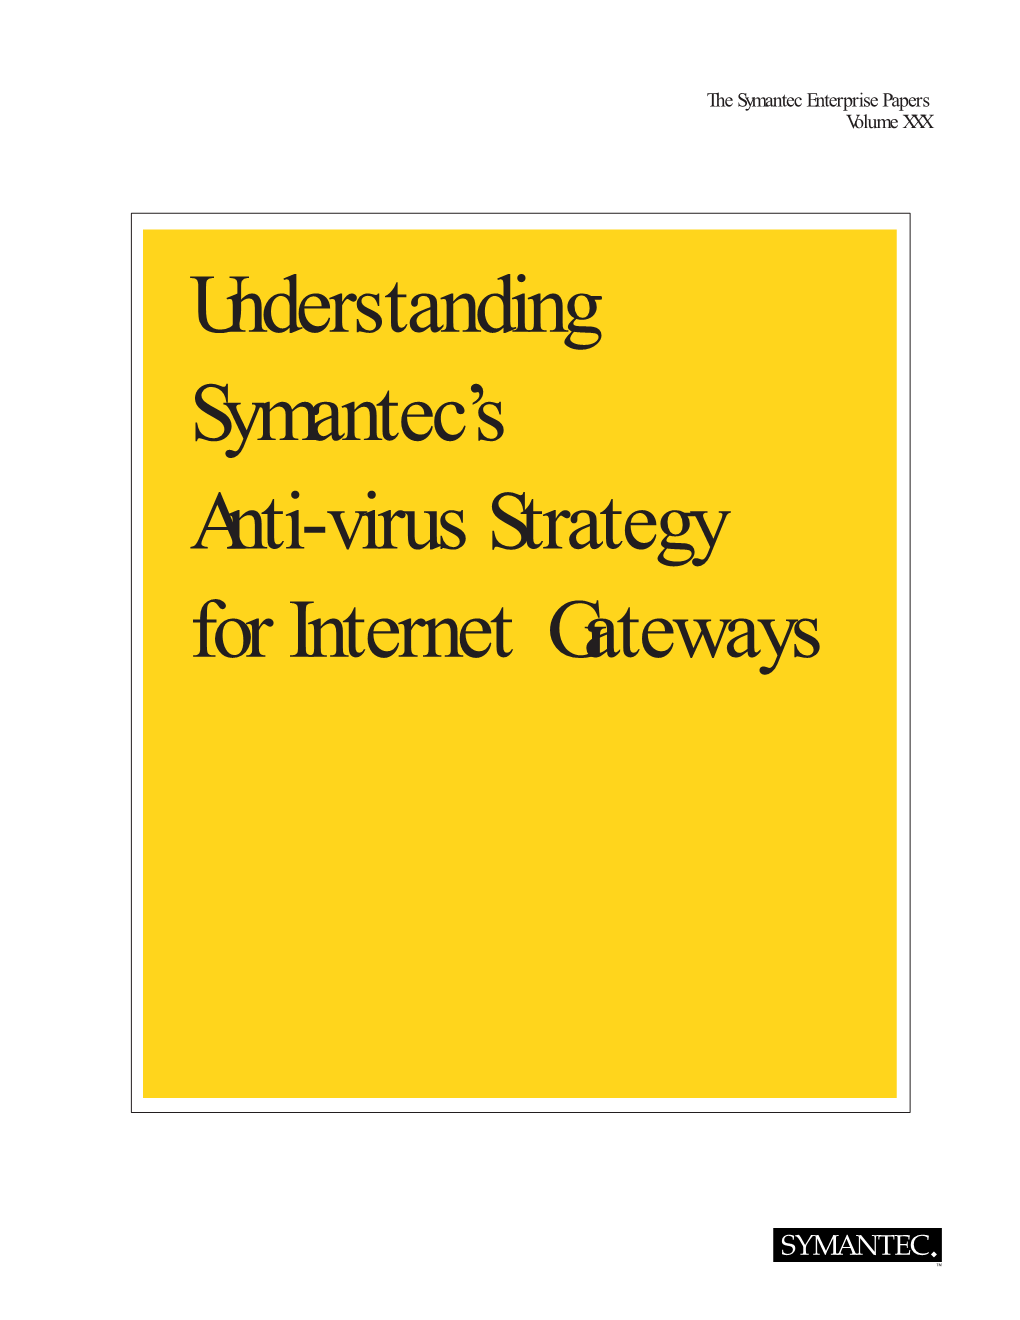 Understanding Symantec's Anti-Virus Strategy for Internet Gateways